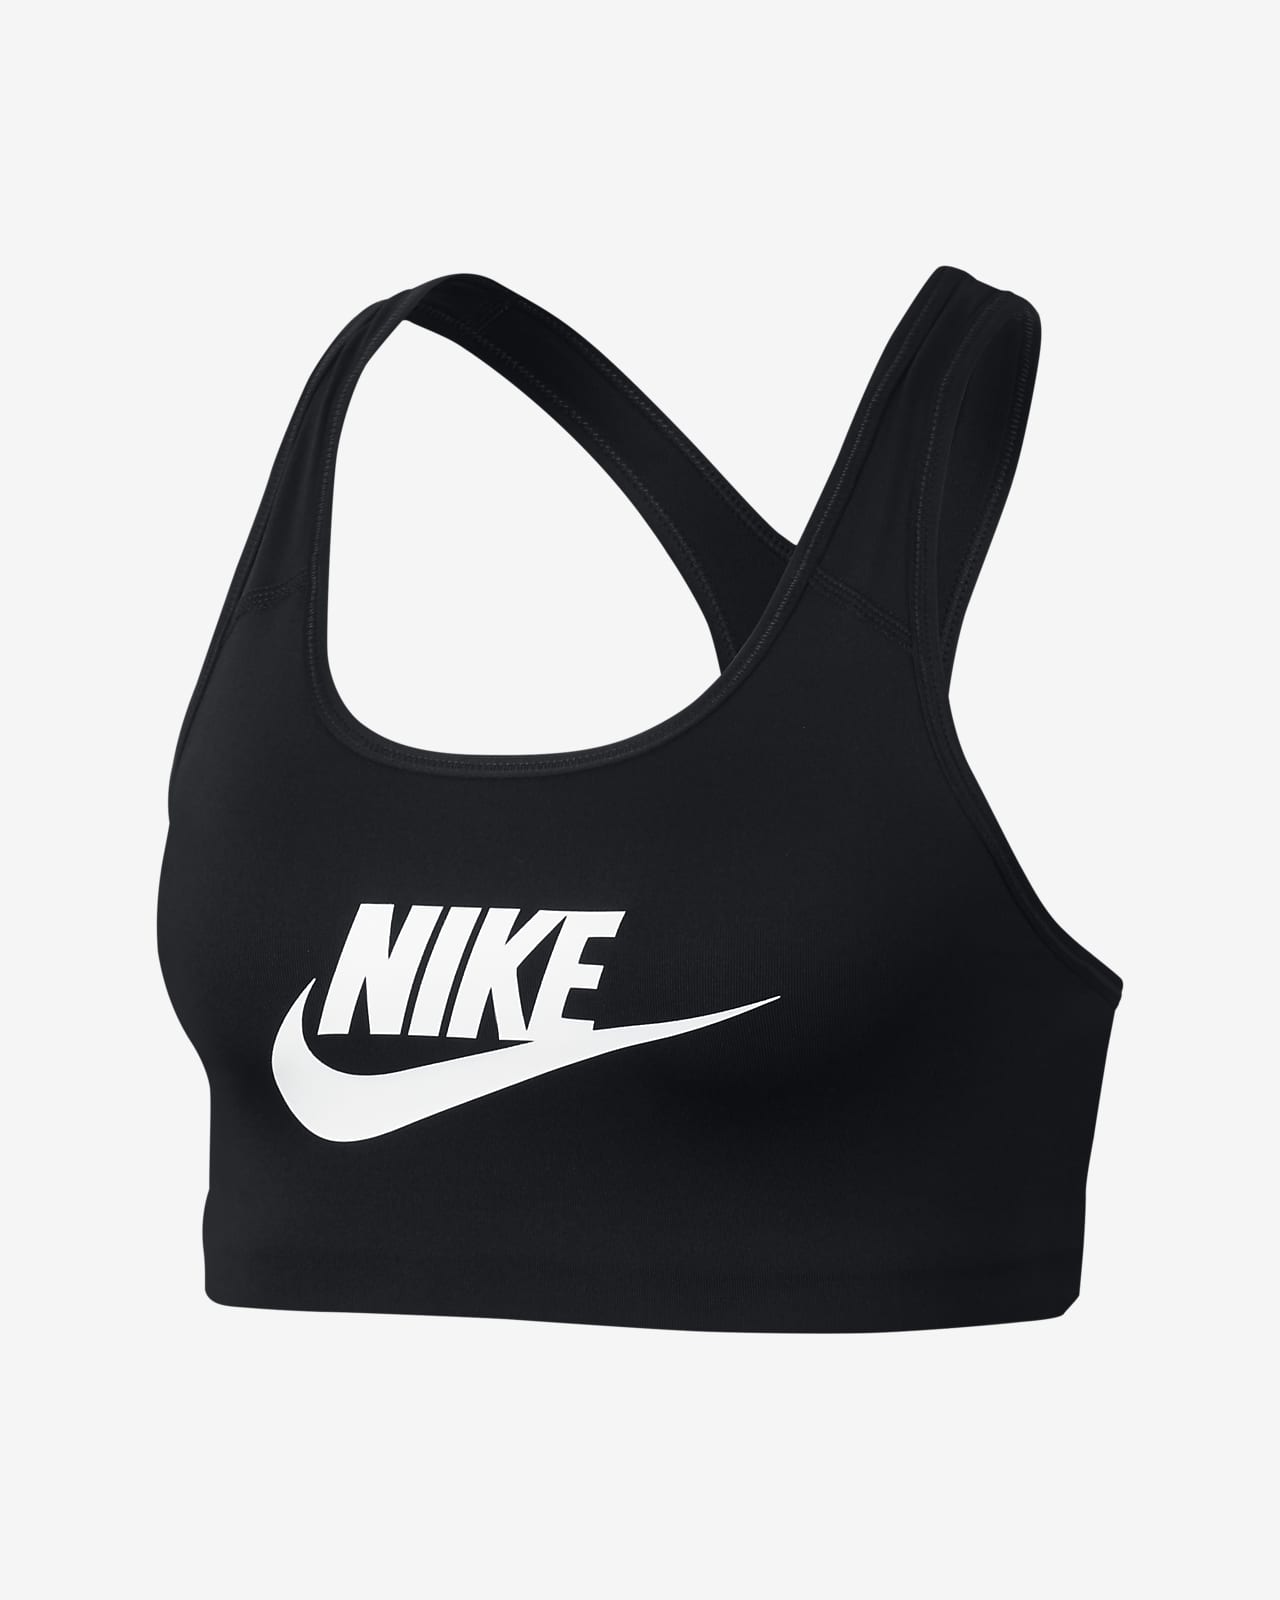 Buy Nike Women's Swoosh Sports Bra Online India